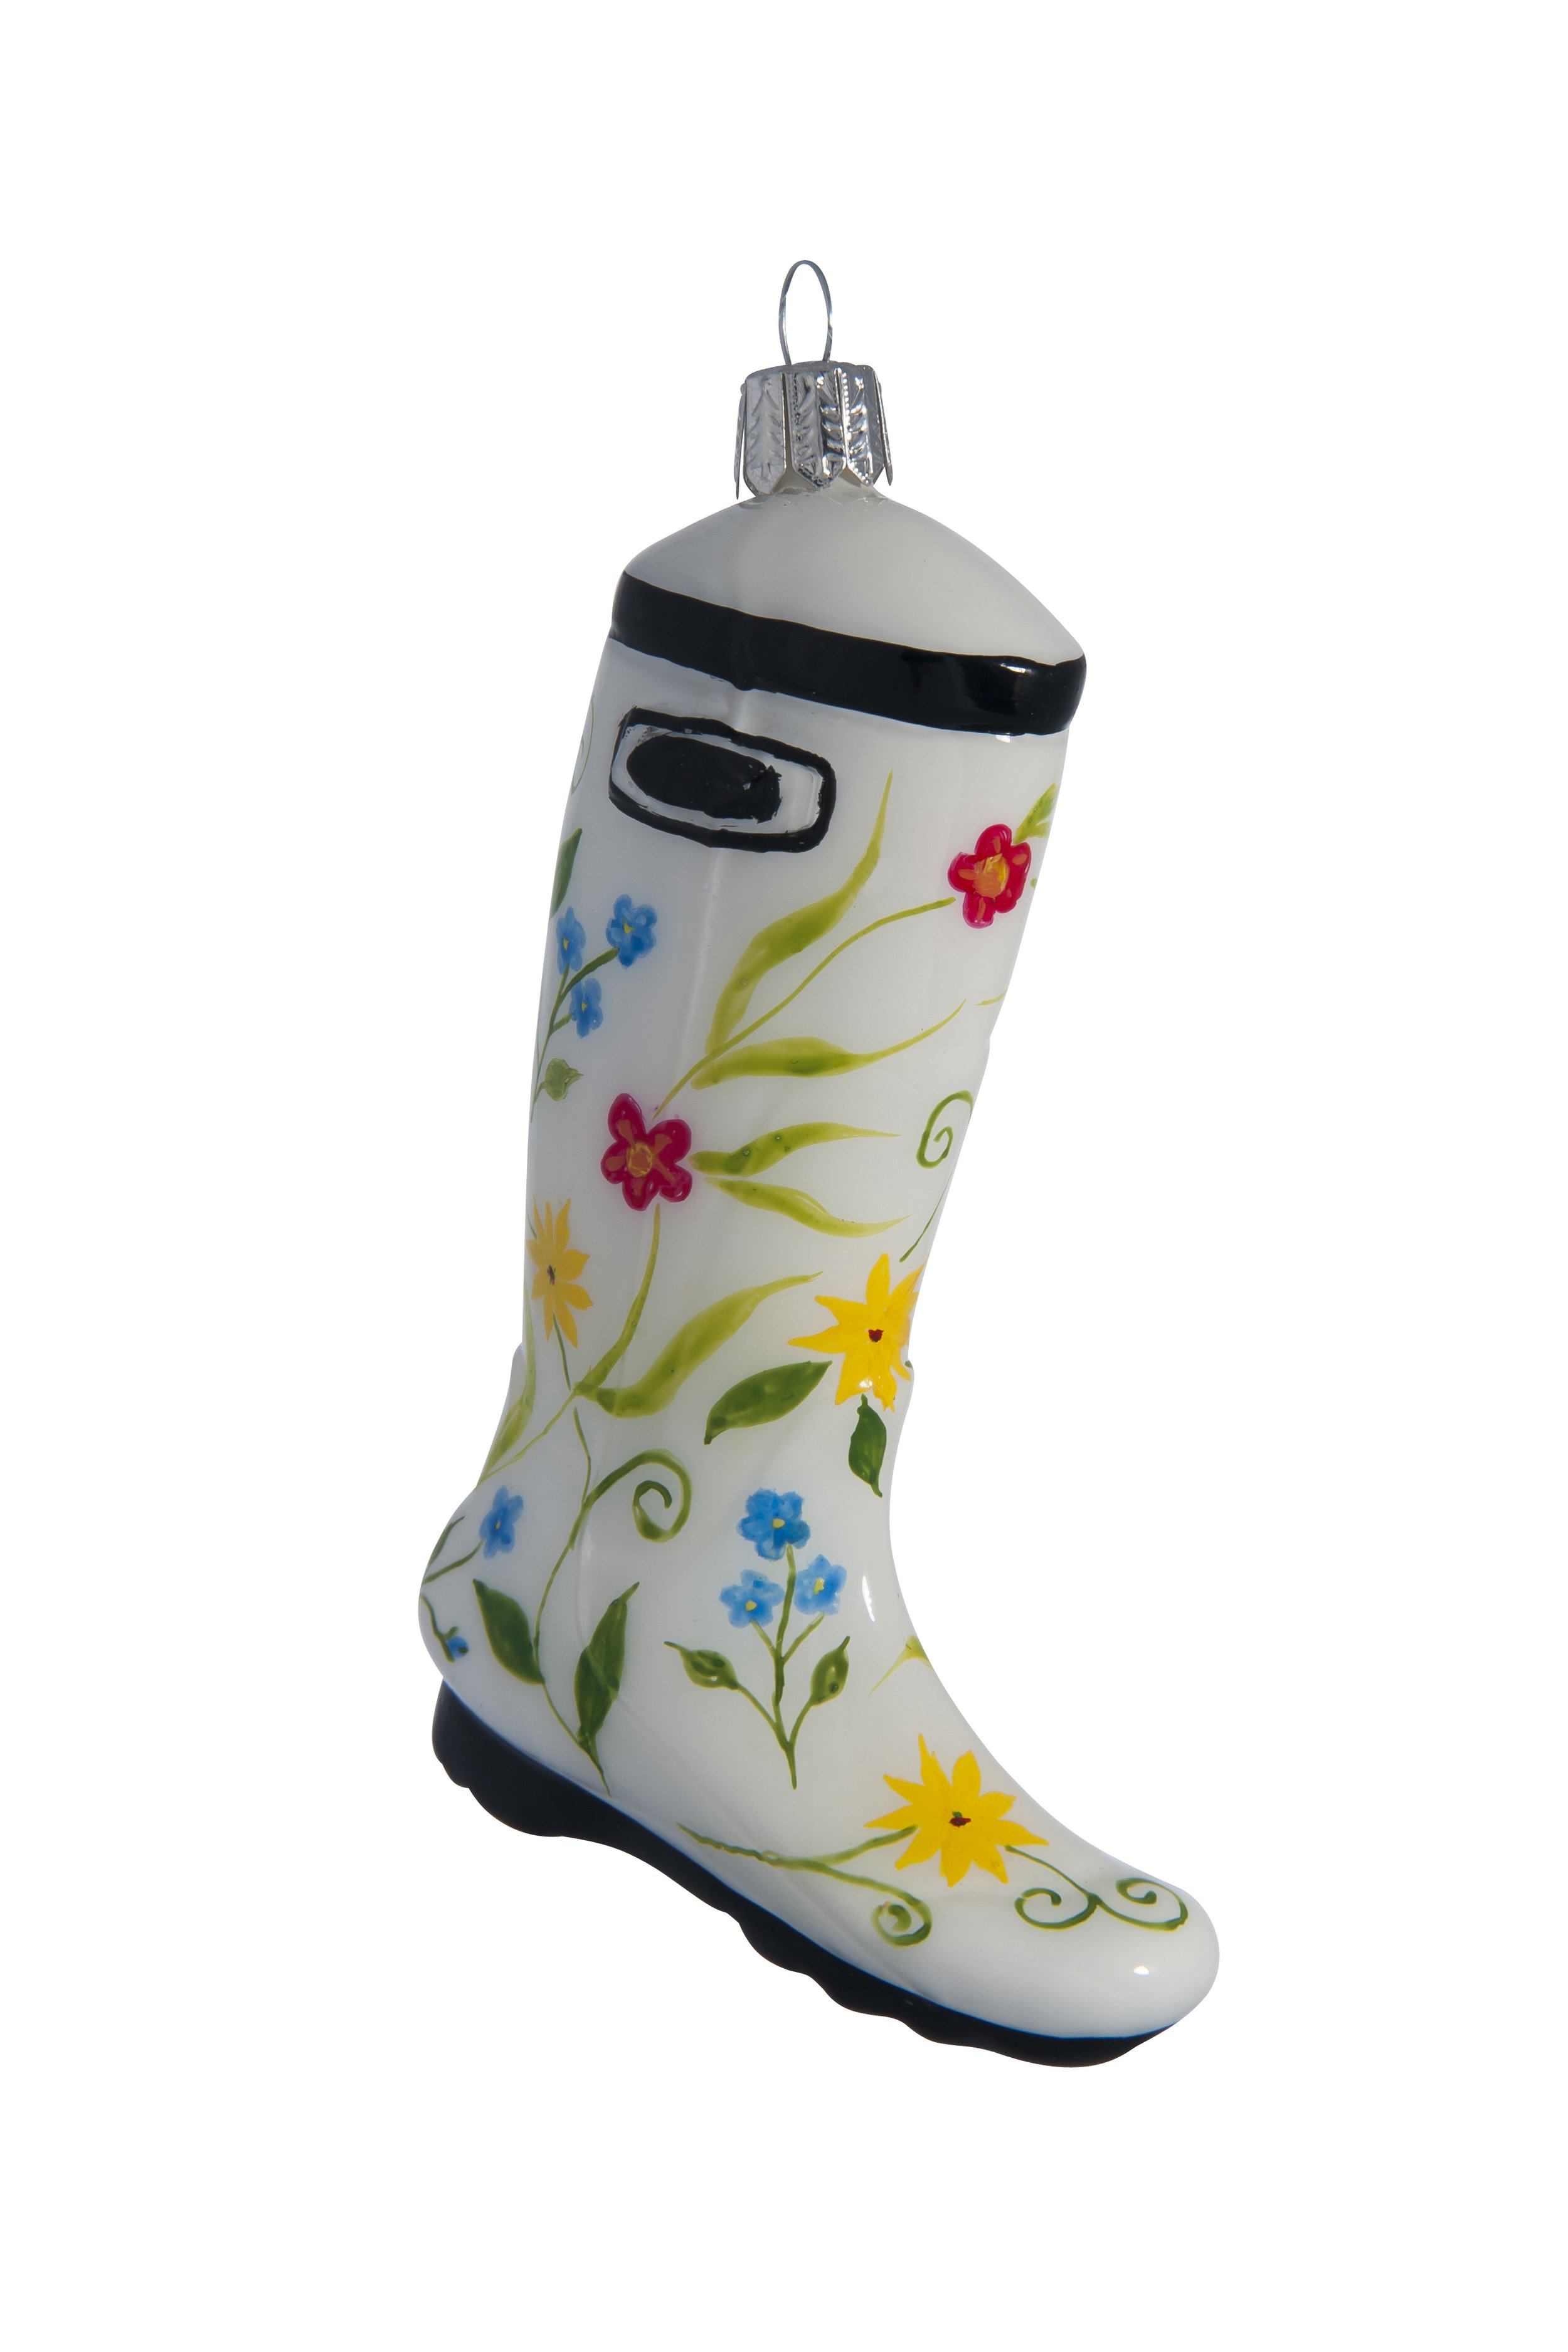 3759070_1 Flowered Garden Boot.JPG